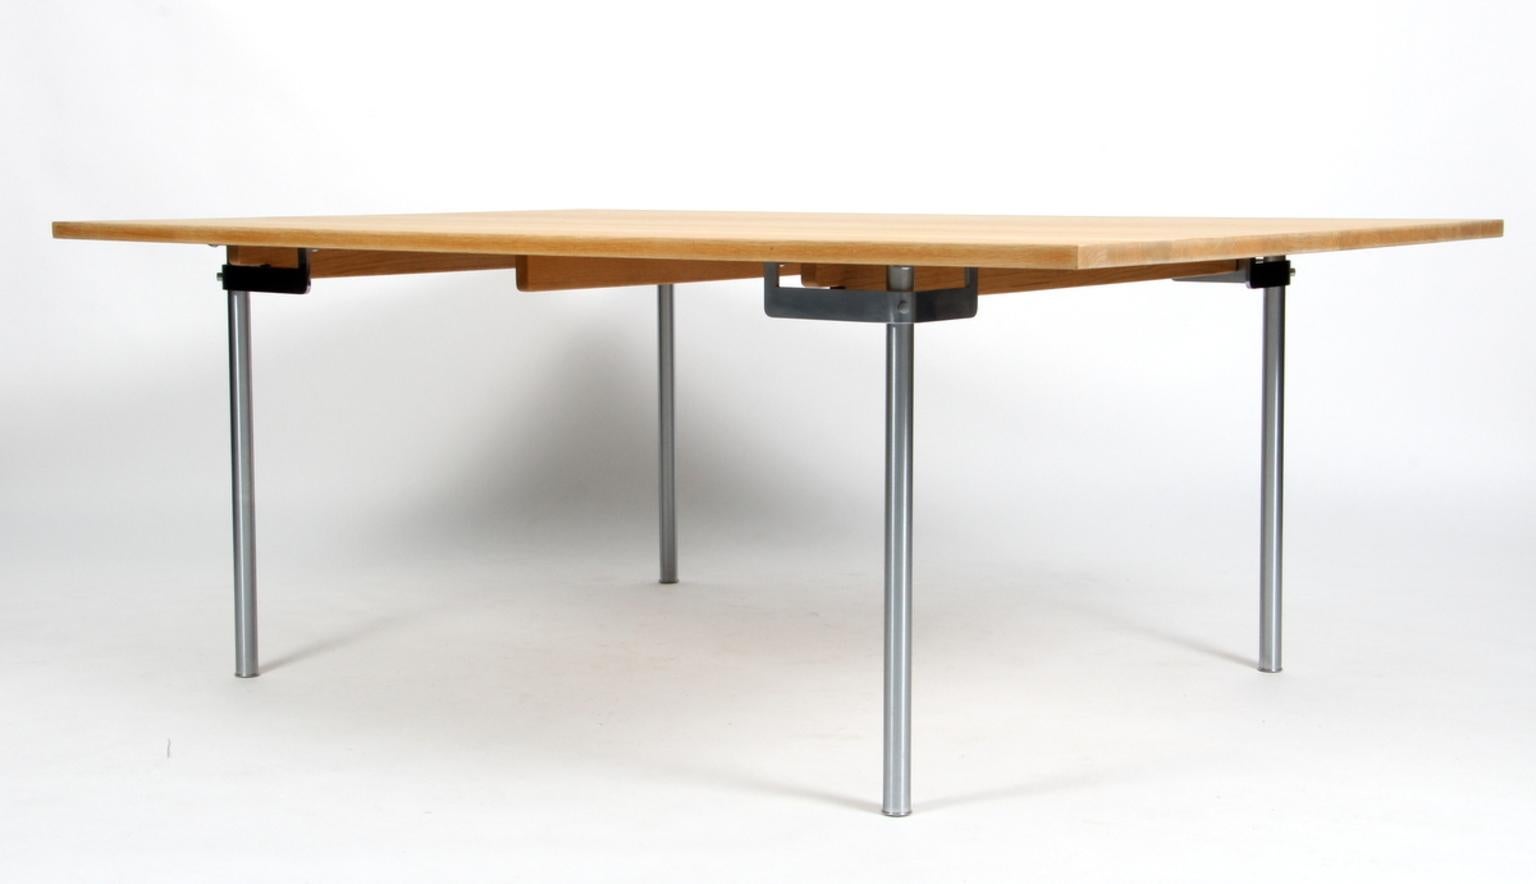 Hans J. Wegner dining table made of massive soap treated oak.

Base of brushed steel.

Model CH316, made by Tranekjær for Carl Hansen.